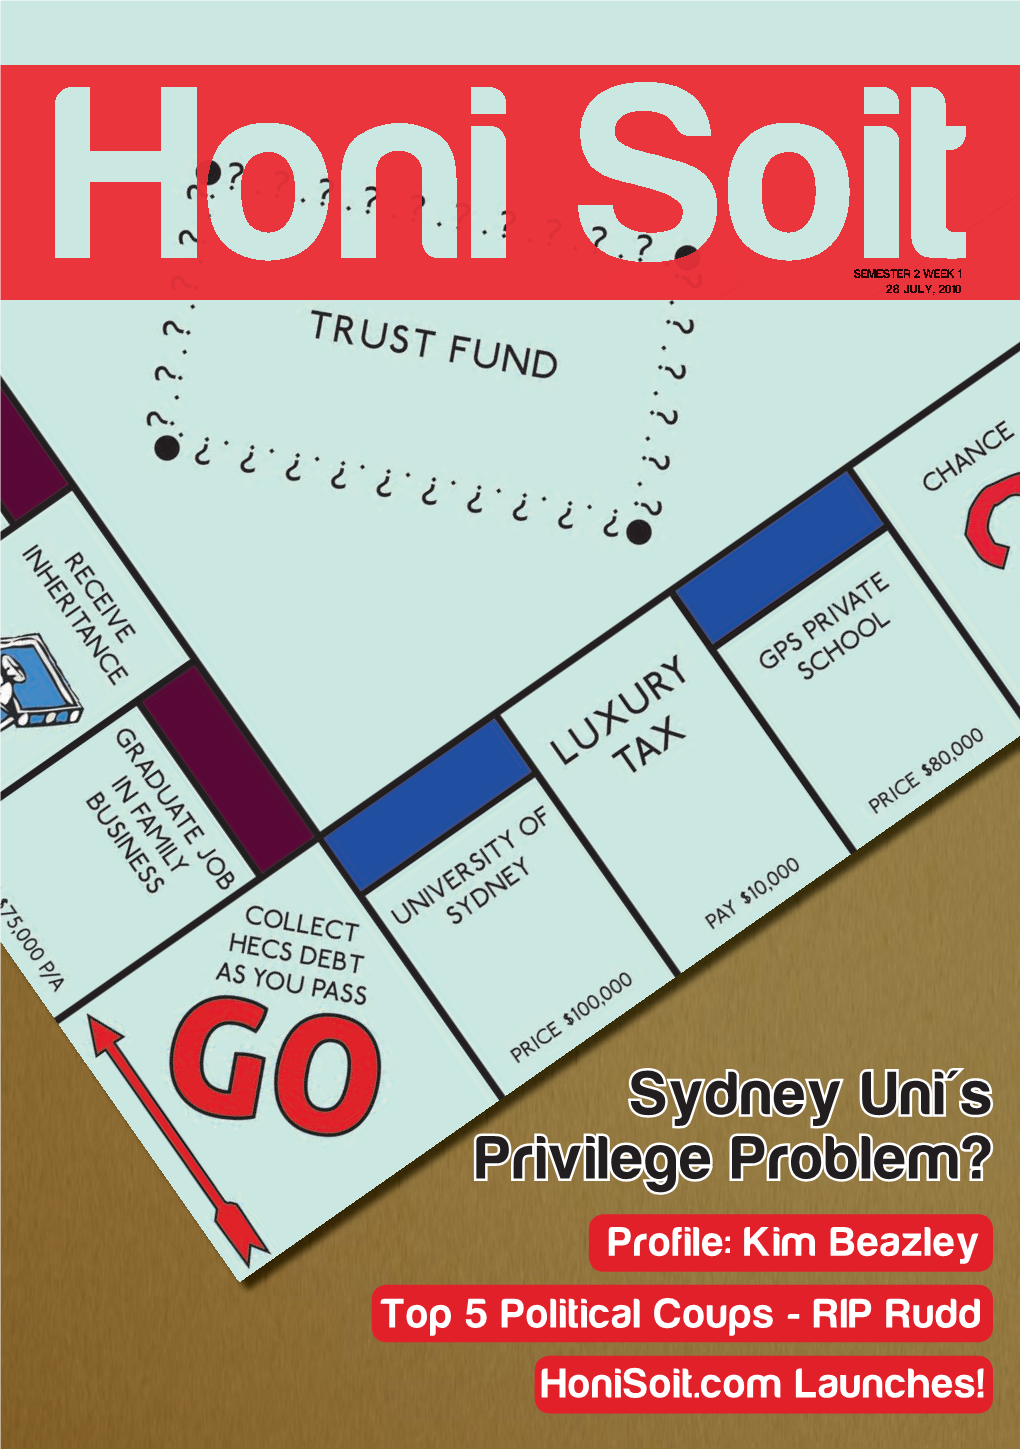 Sydney Uni's Privilege Problem?